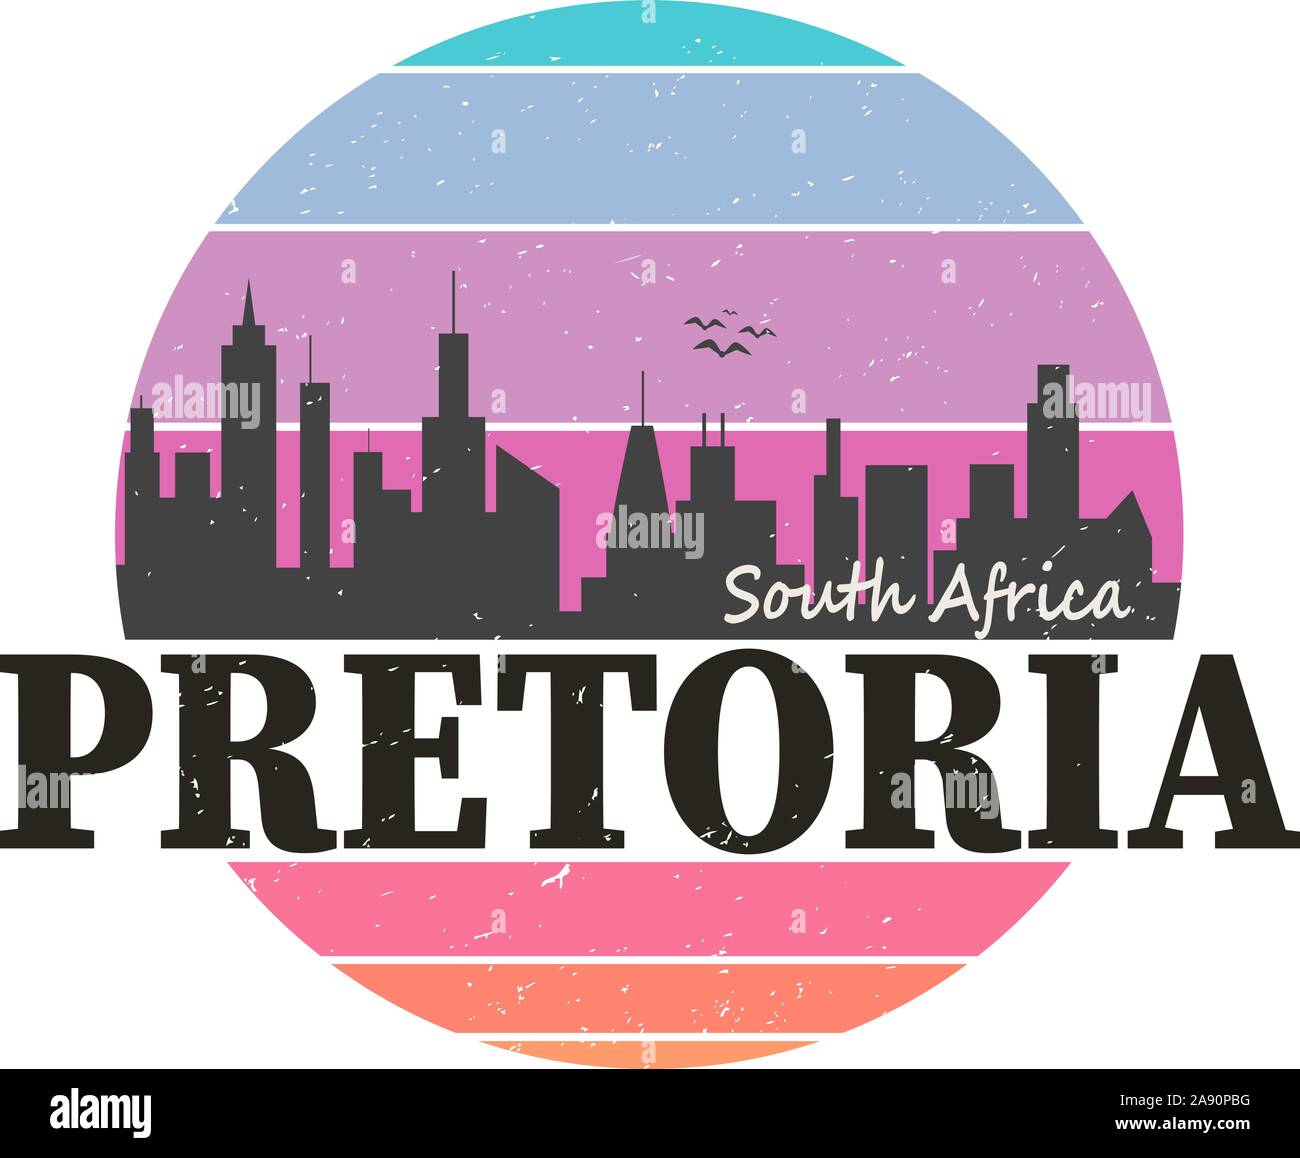 South Africa Pretoria. stamp logo badge t-shirt emblem Stock Vector